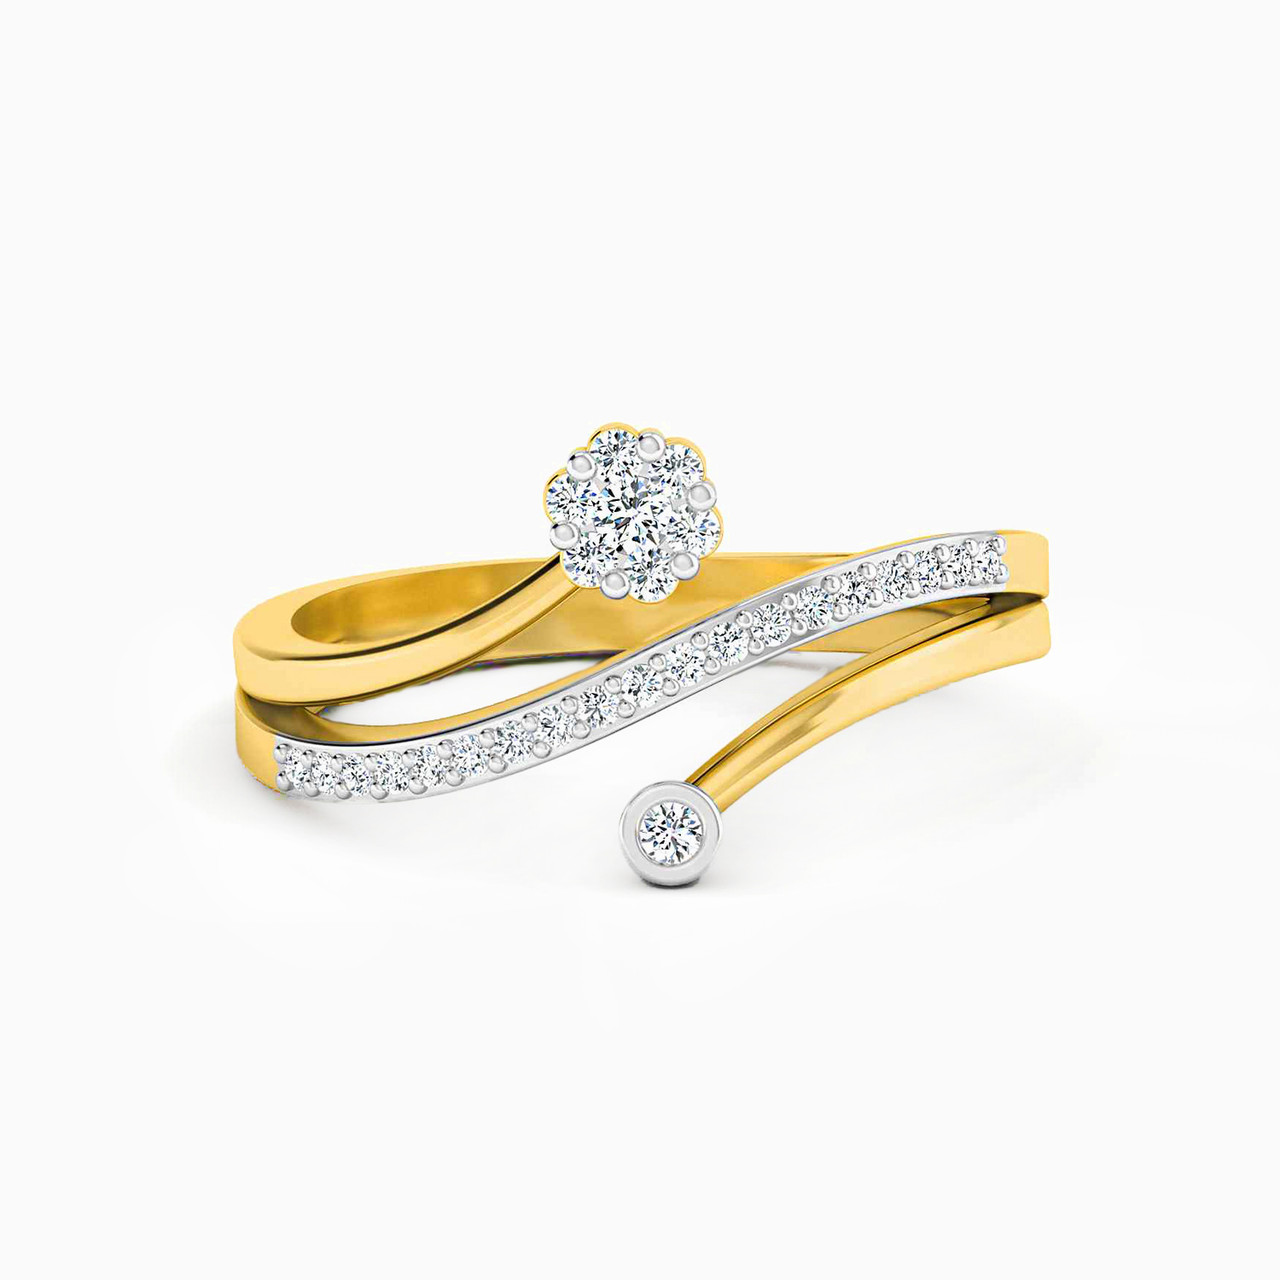 18K Gold Diamond Two-headed Ring